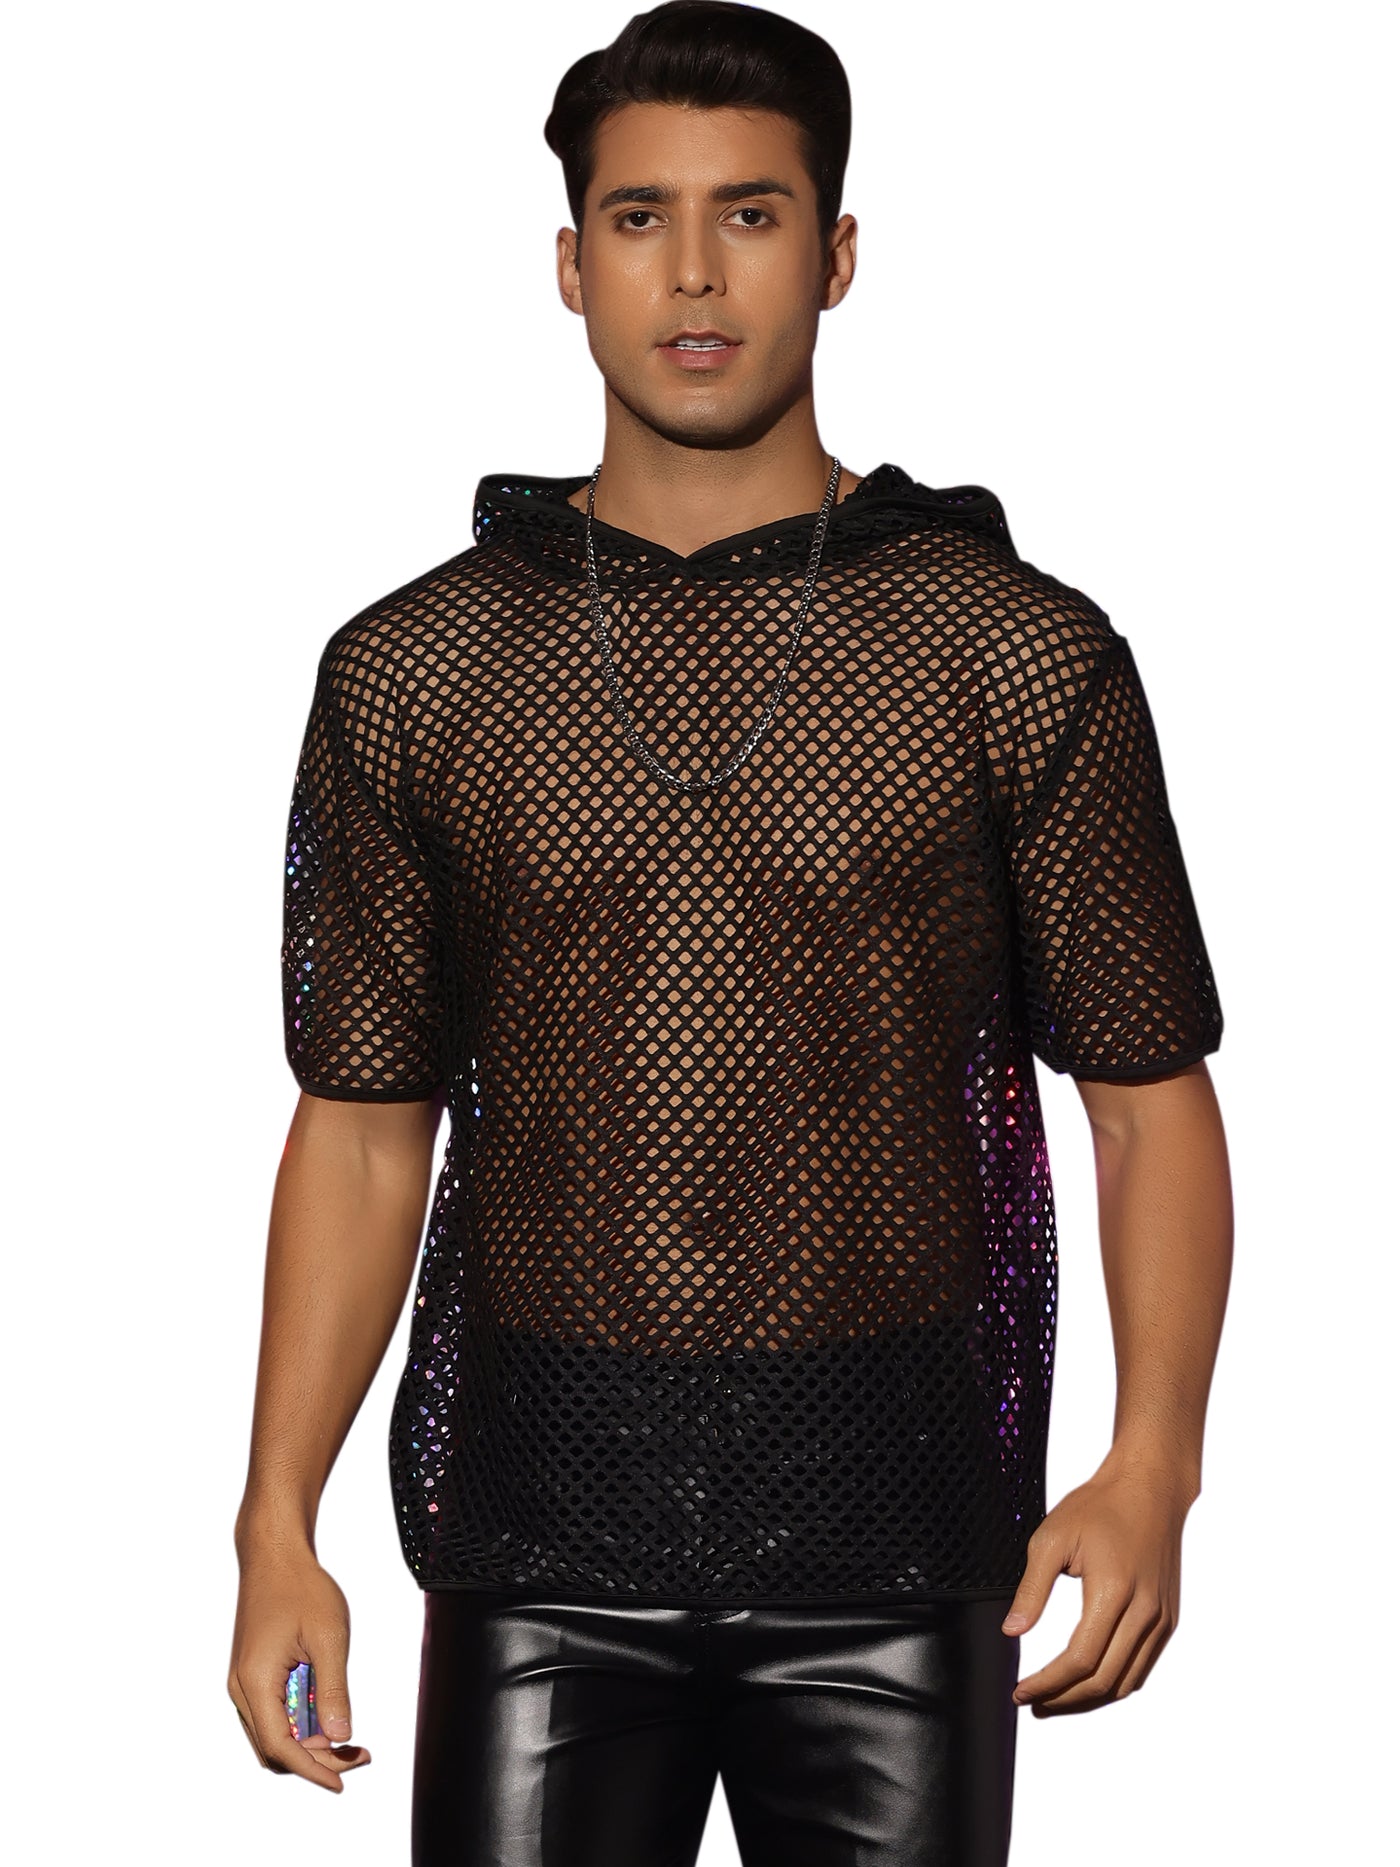 Bublédon Sheer Mesh T-Shirts for Men's See Through Short Sleeves Club Hoodie Tee Tops